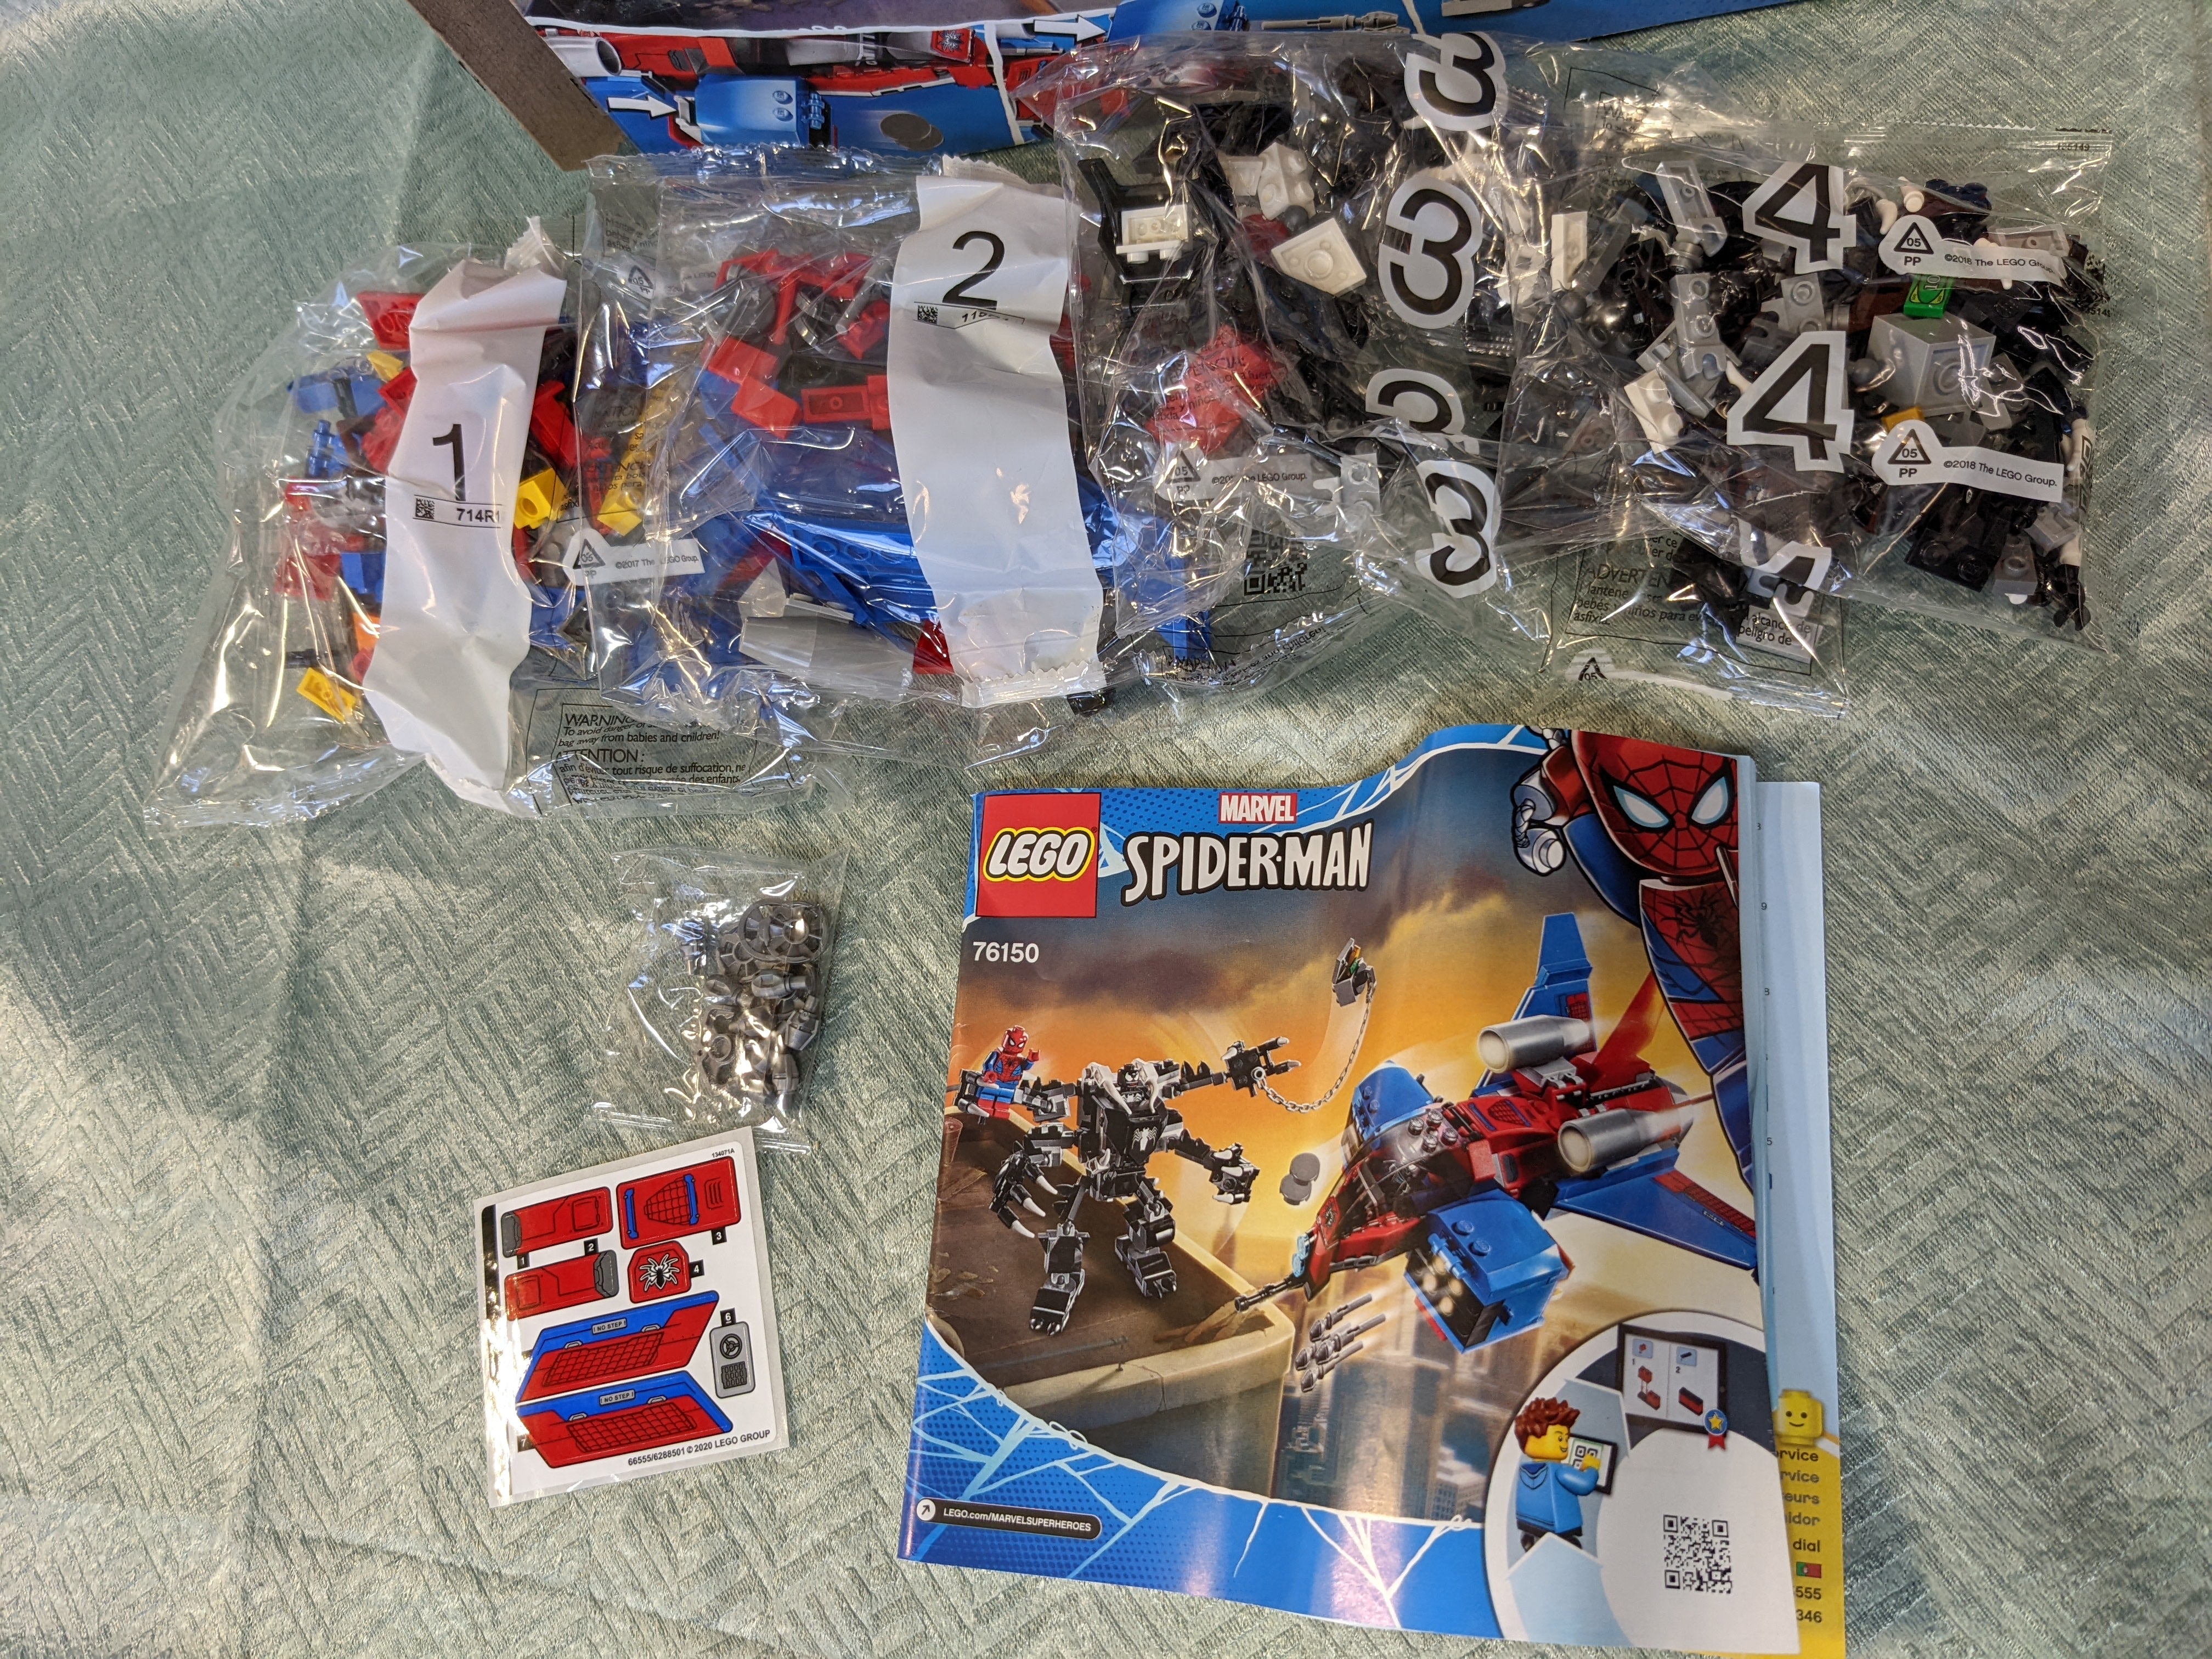 Lego 76150 Marvel Spider-Man Spider-Jet Vs Venom Mech Superhero Building Set - Each